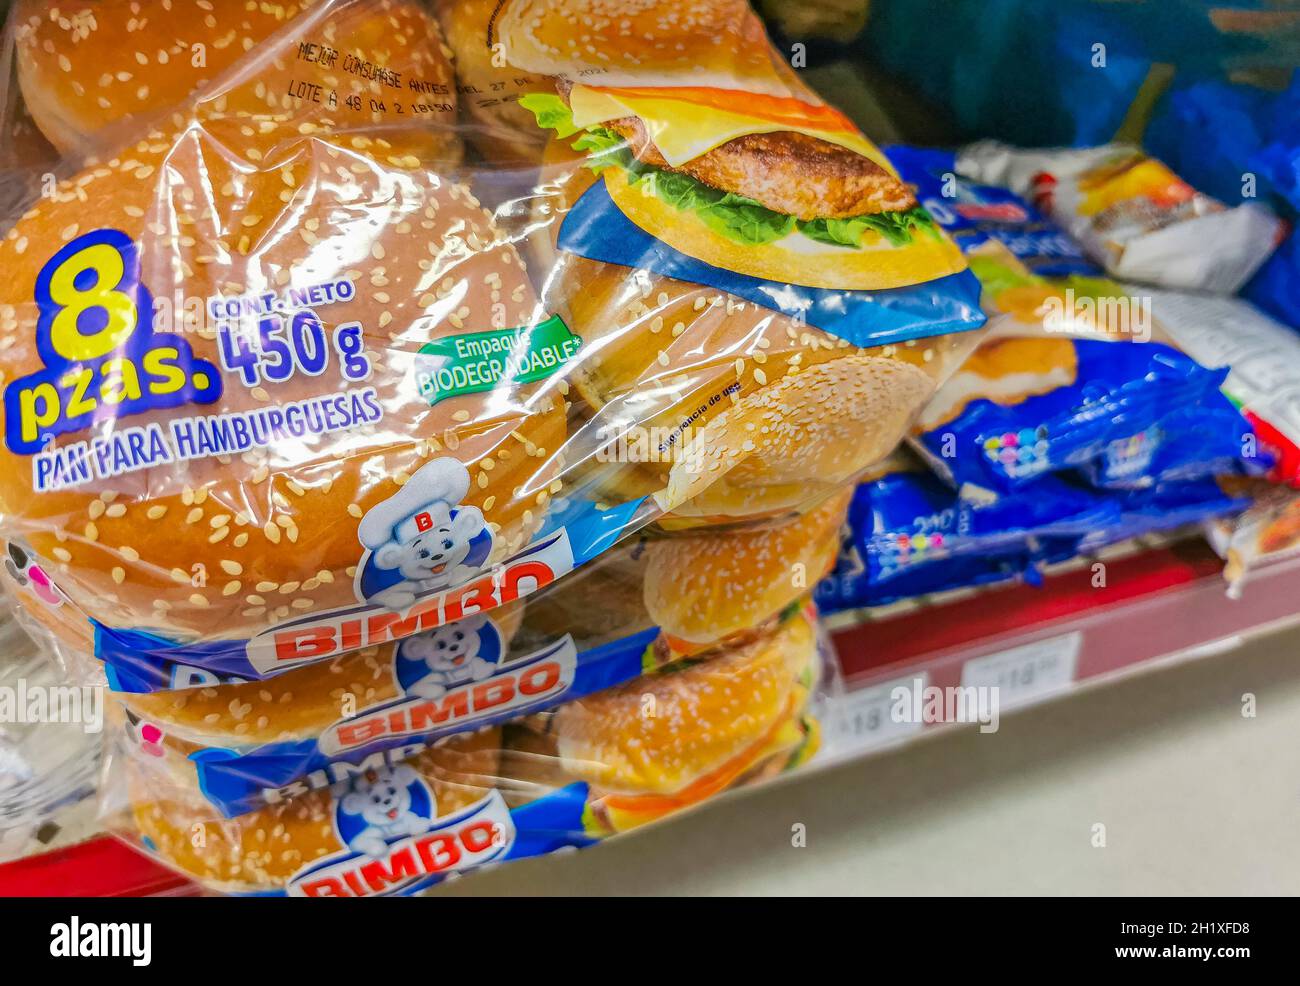 Bimbo bread for hamburgers packaging in the supermarket in Playa del Carmen in Mexico. Stock Photo